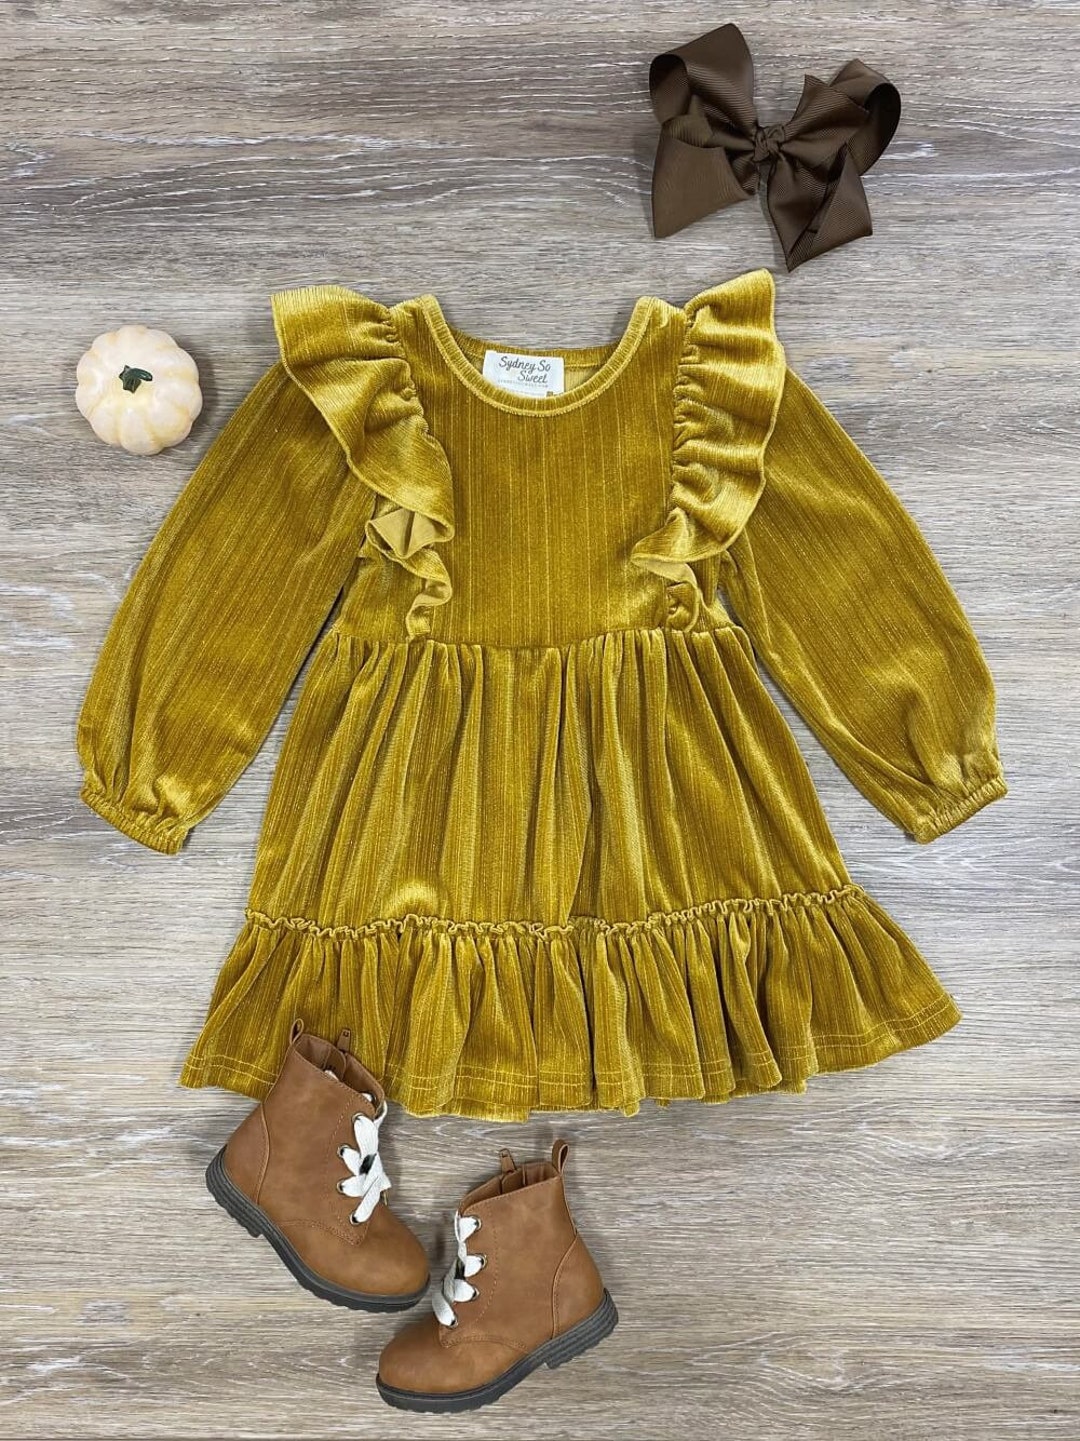 Dress - Embroidered iridescent velvet, gold & multicolour — Fashion